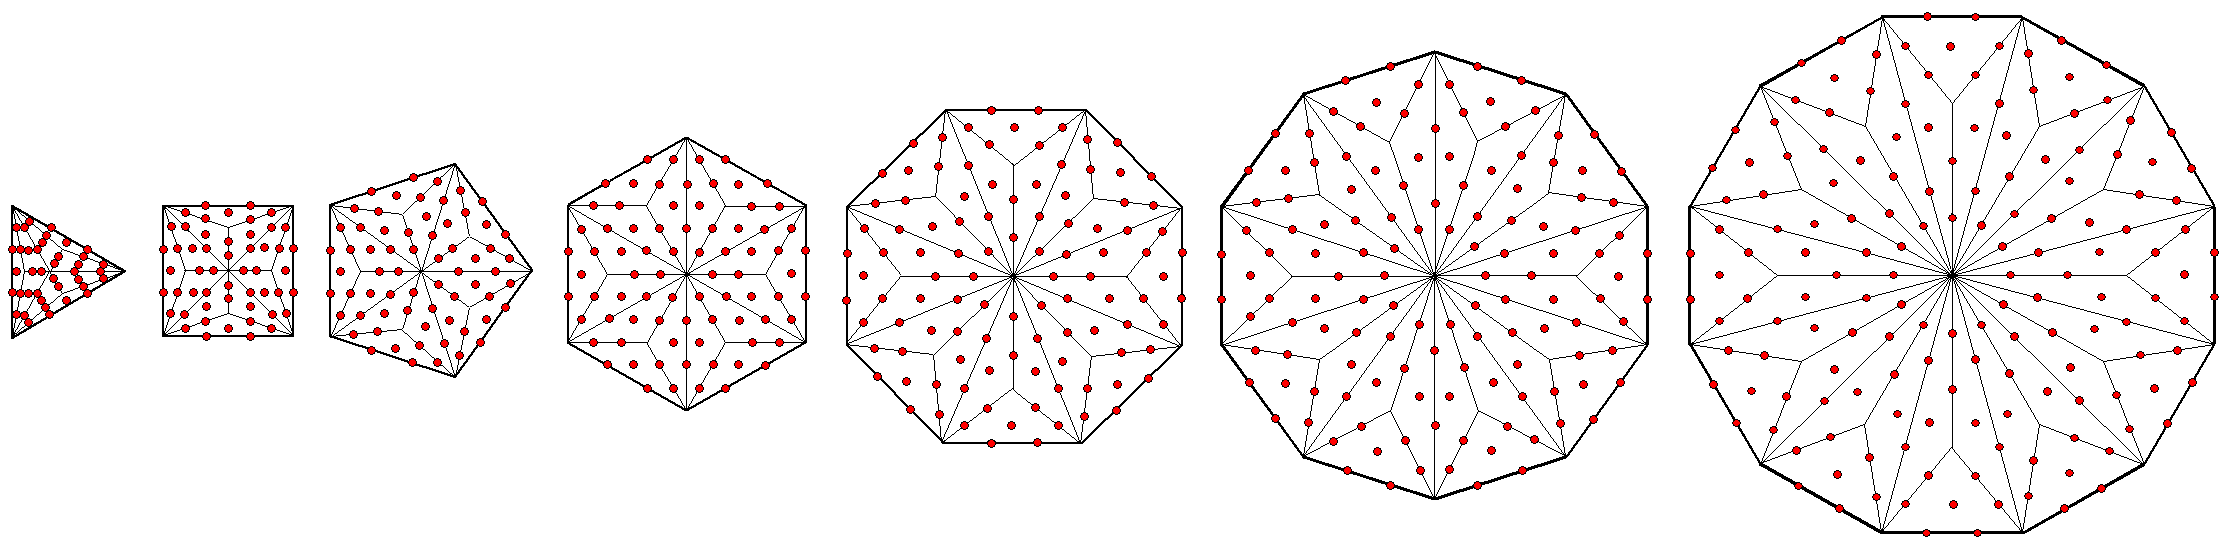 624 hexagonal yods in 7 separate Type B polygons